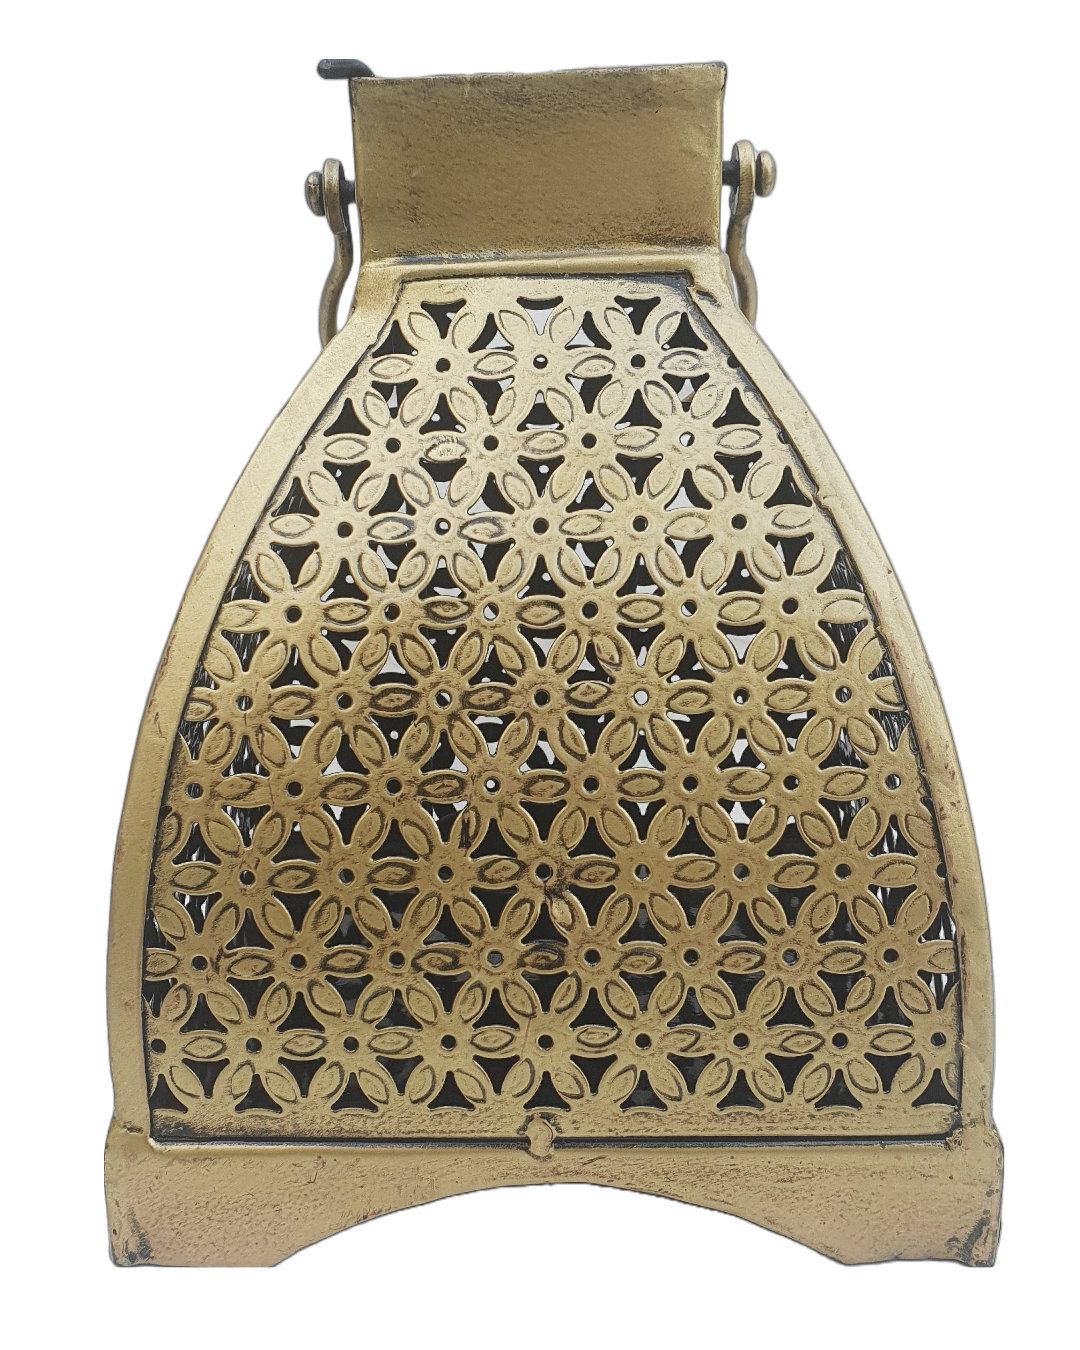 MohanJodero Metal Handicraft Handmade Lantern Tea Light Holder